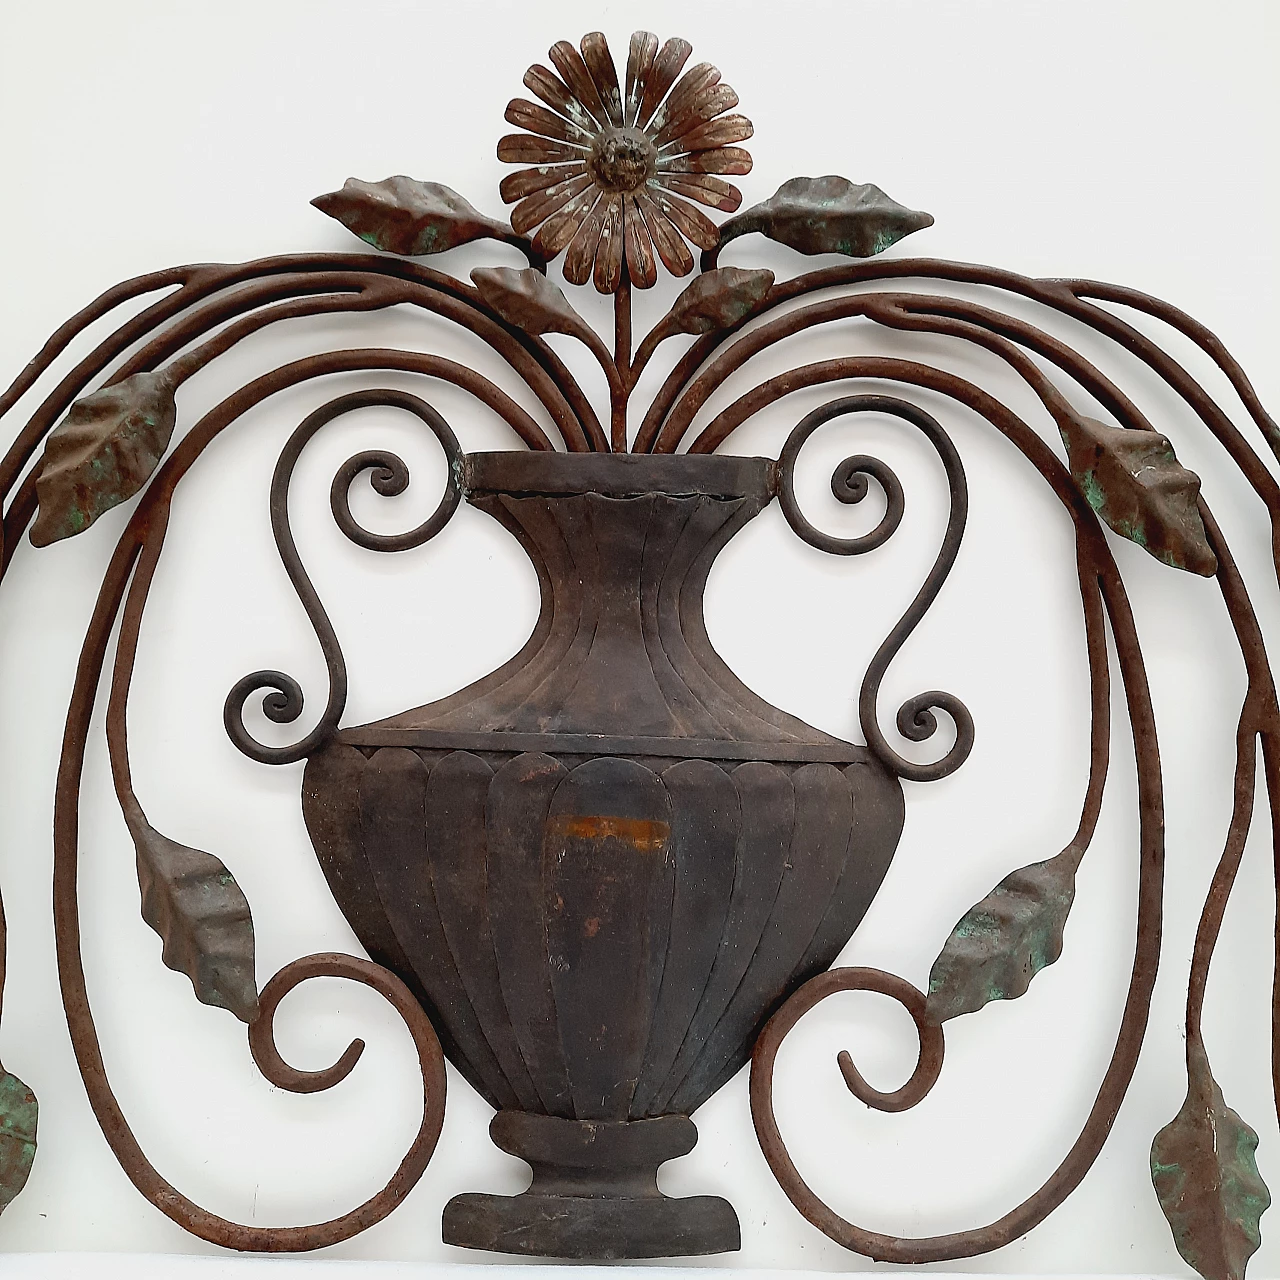 Flower vase frieze in embossed copper, 19th century 7